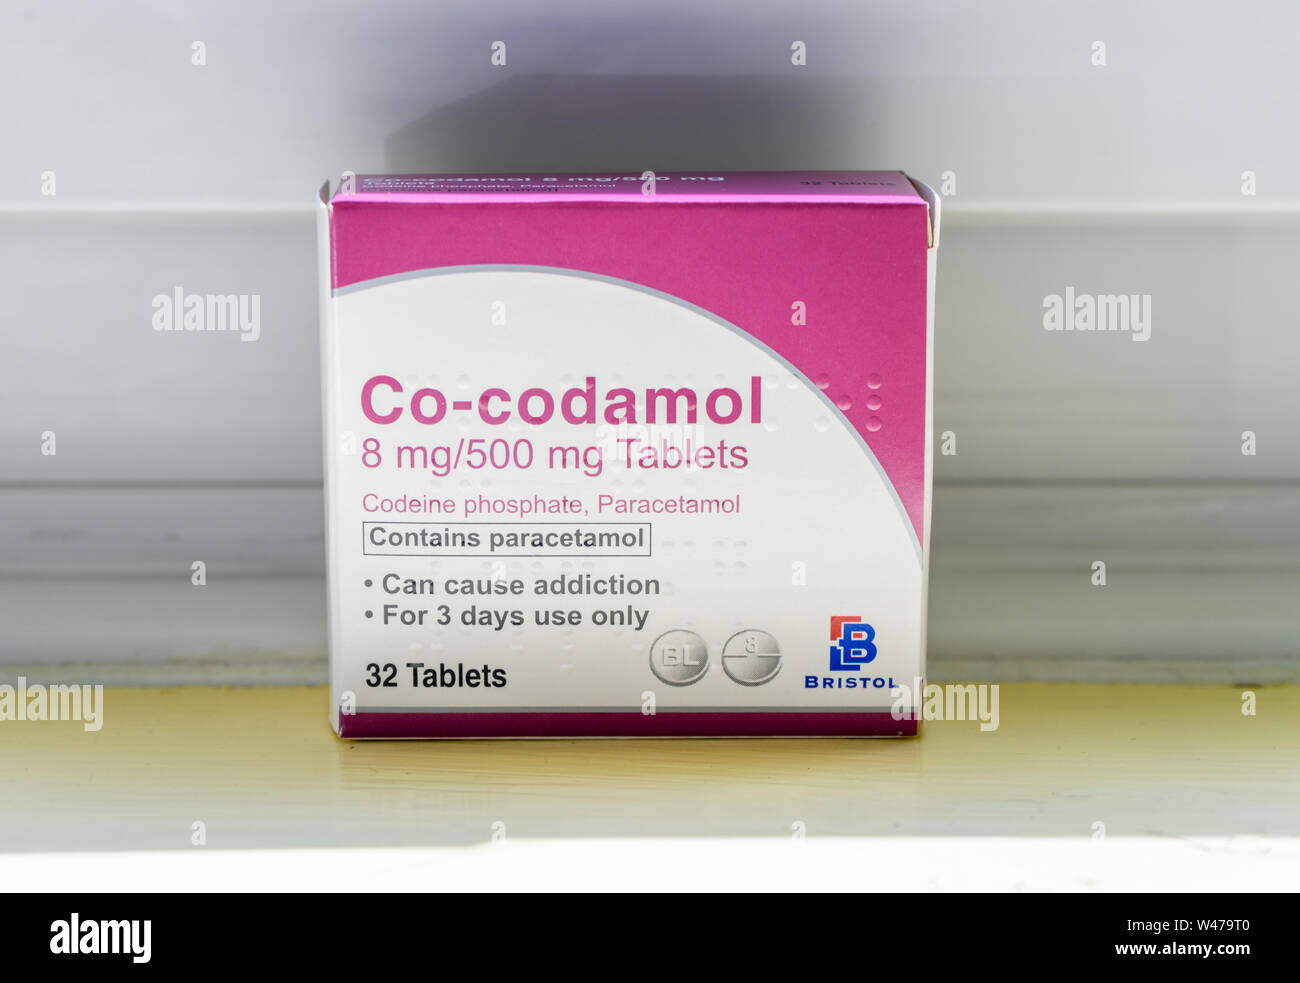 A box of Co-codamol tablets containing 8 mg of Codeine and 500 mg Paracetamol Stock Photo